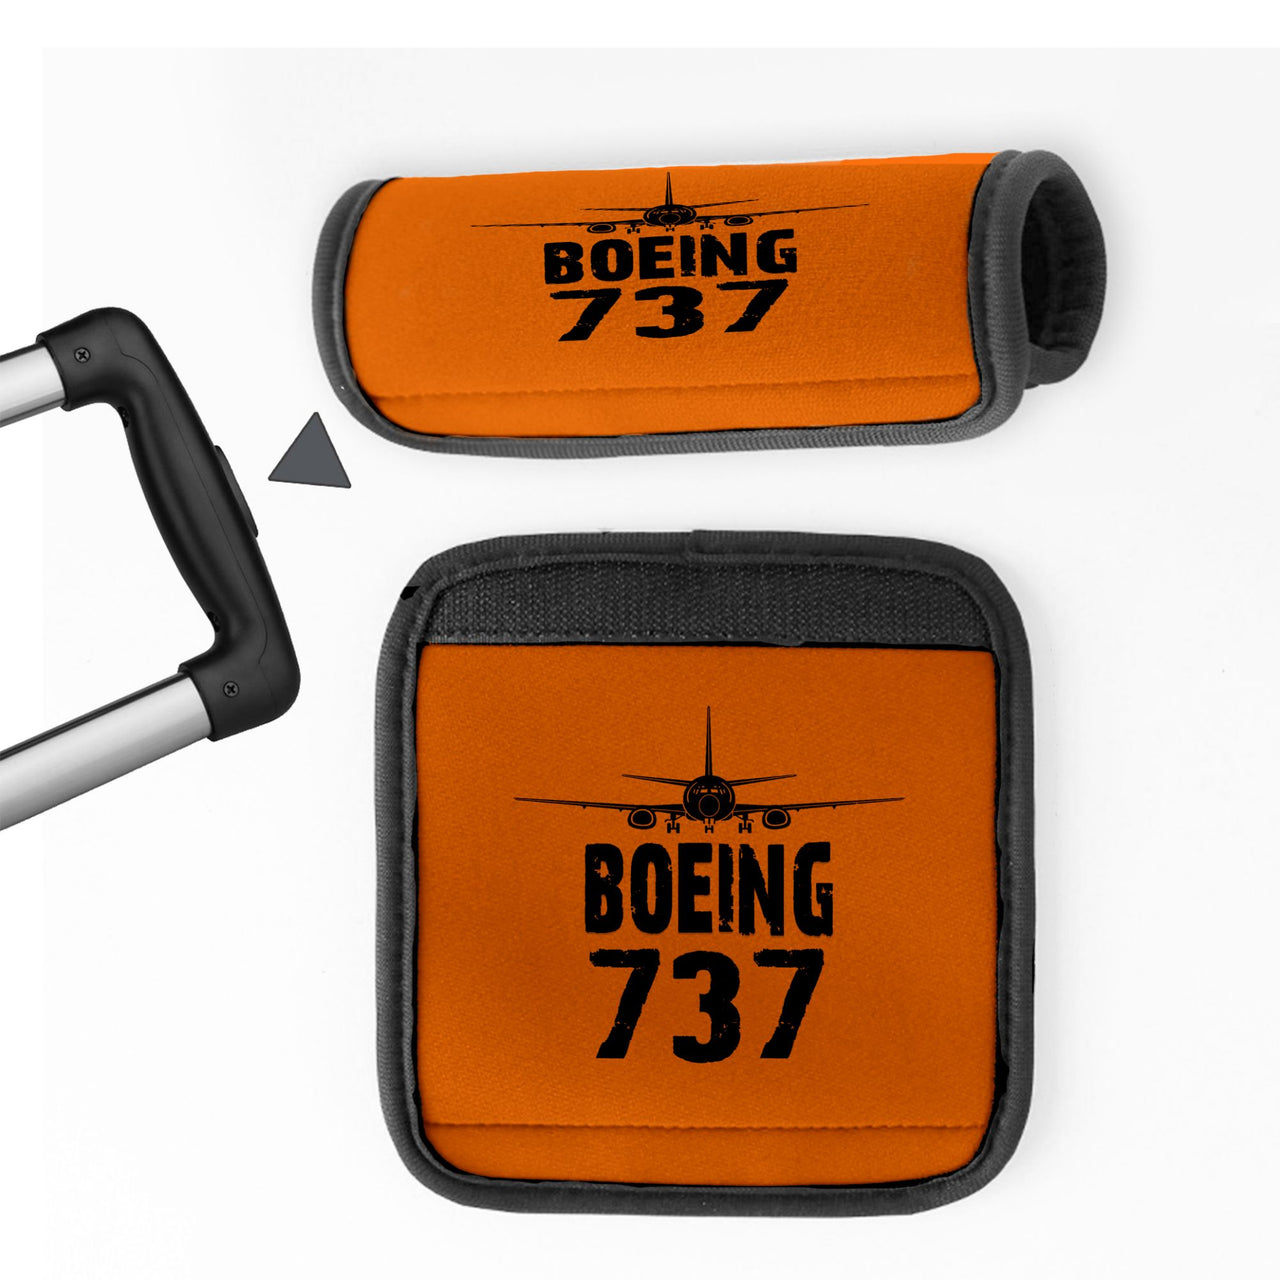 Boeing 737 & Plane Designed Neoprene Luggage Handle Covers